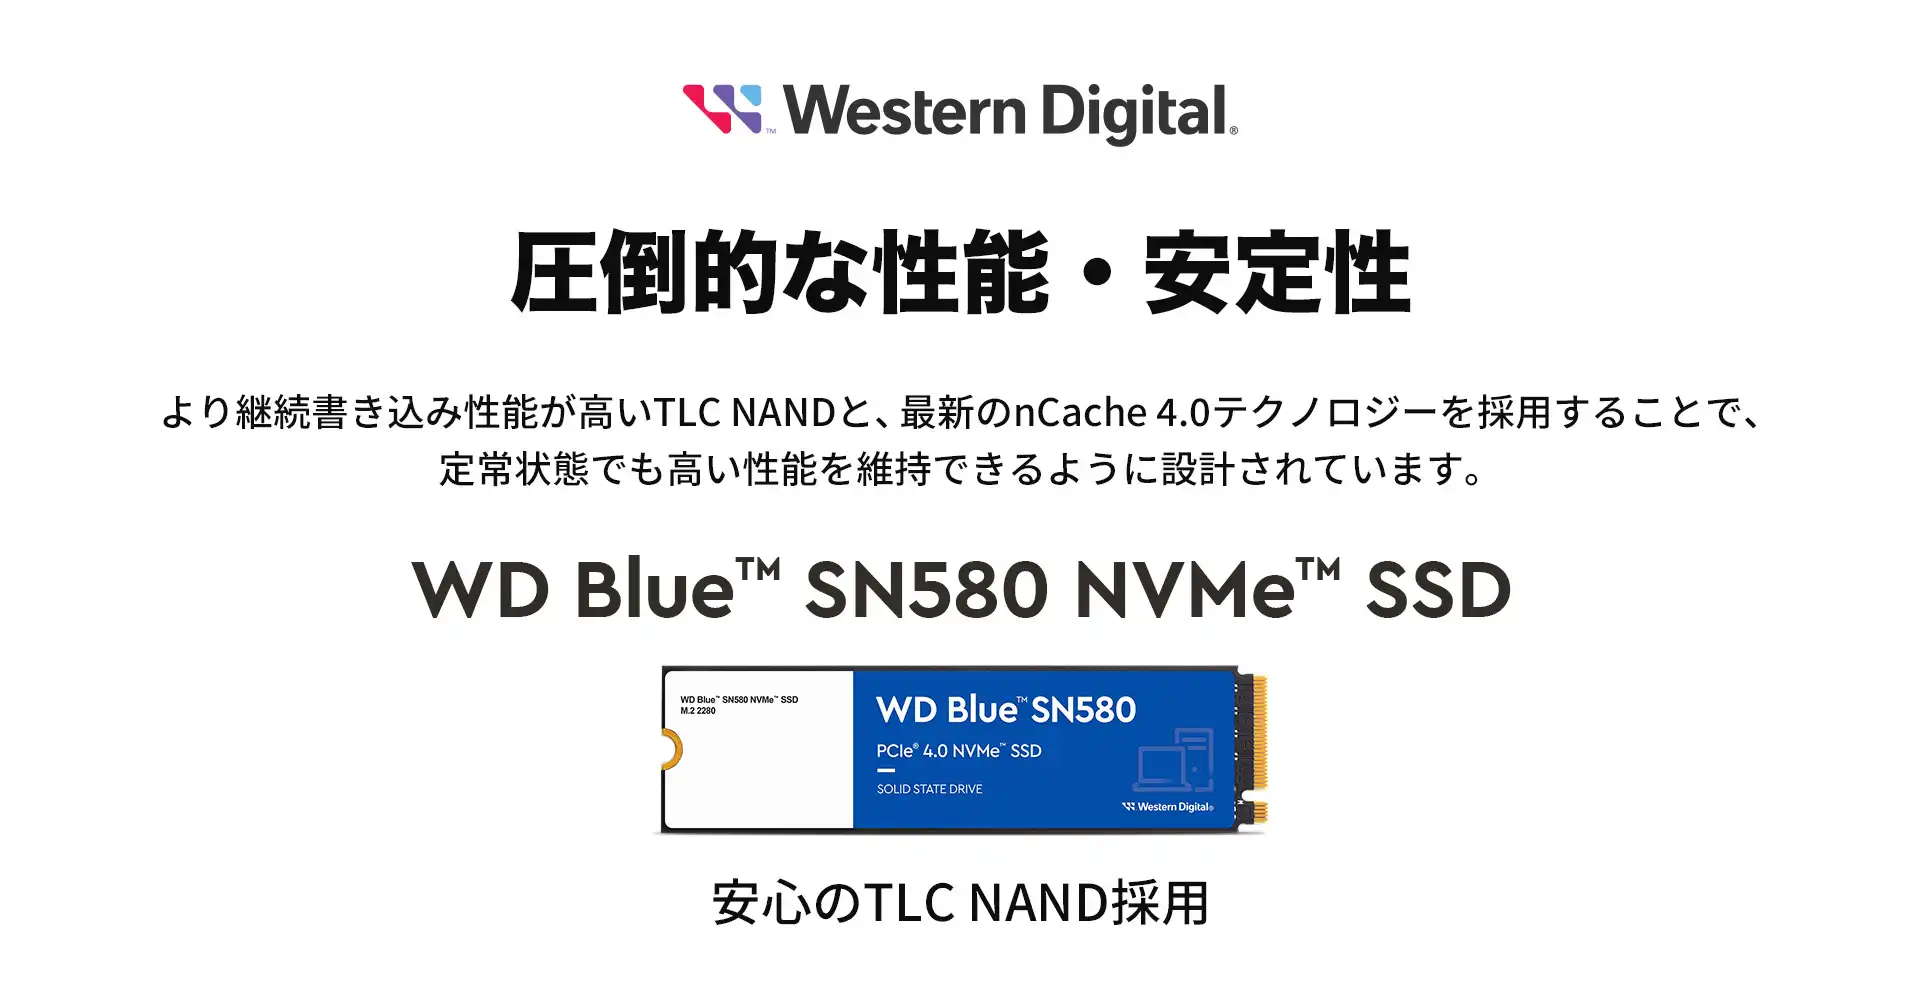 Western Digital WD Blue SN580 NVMe SSD